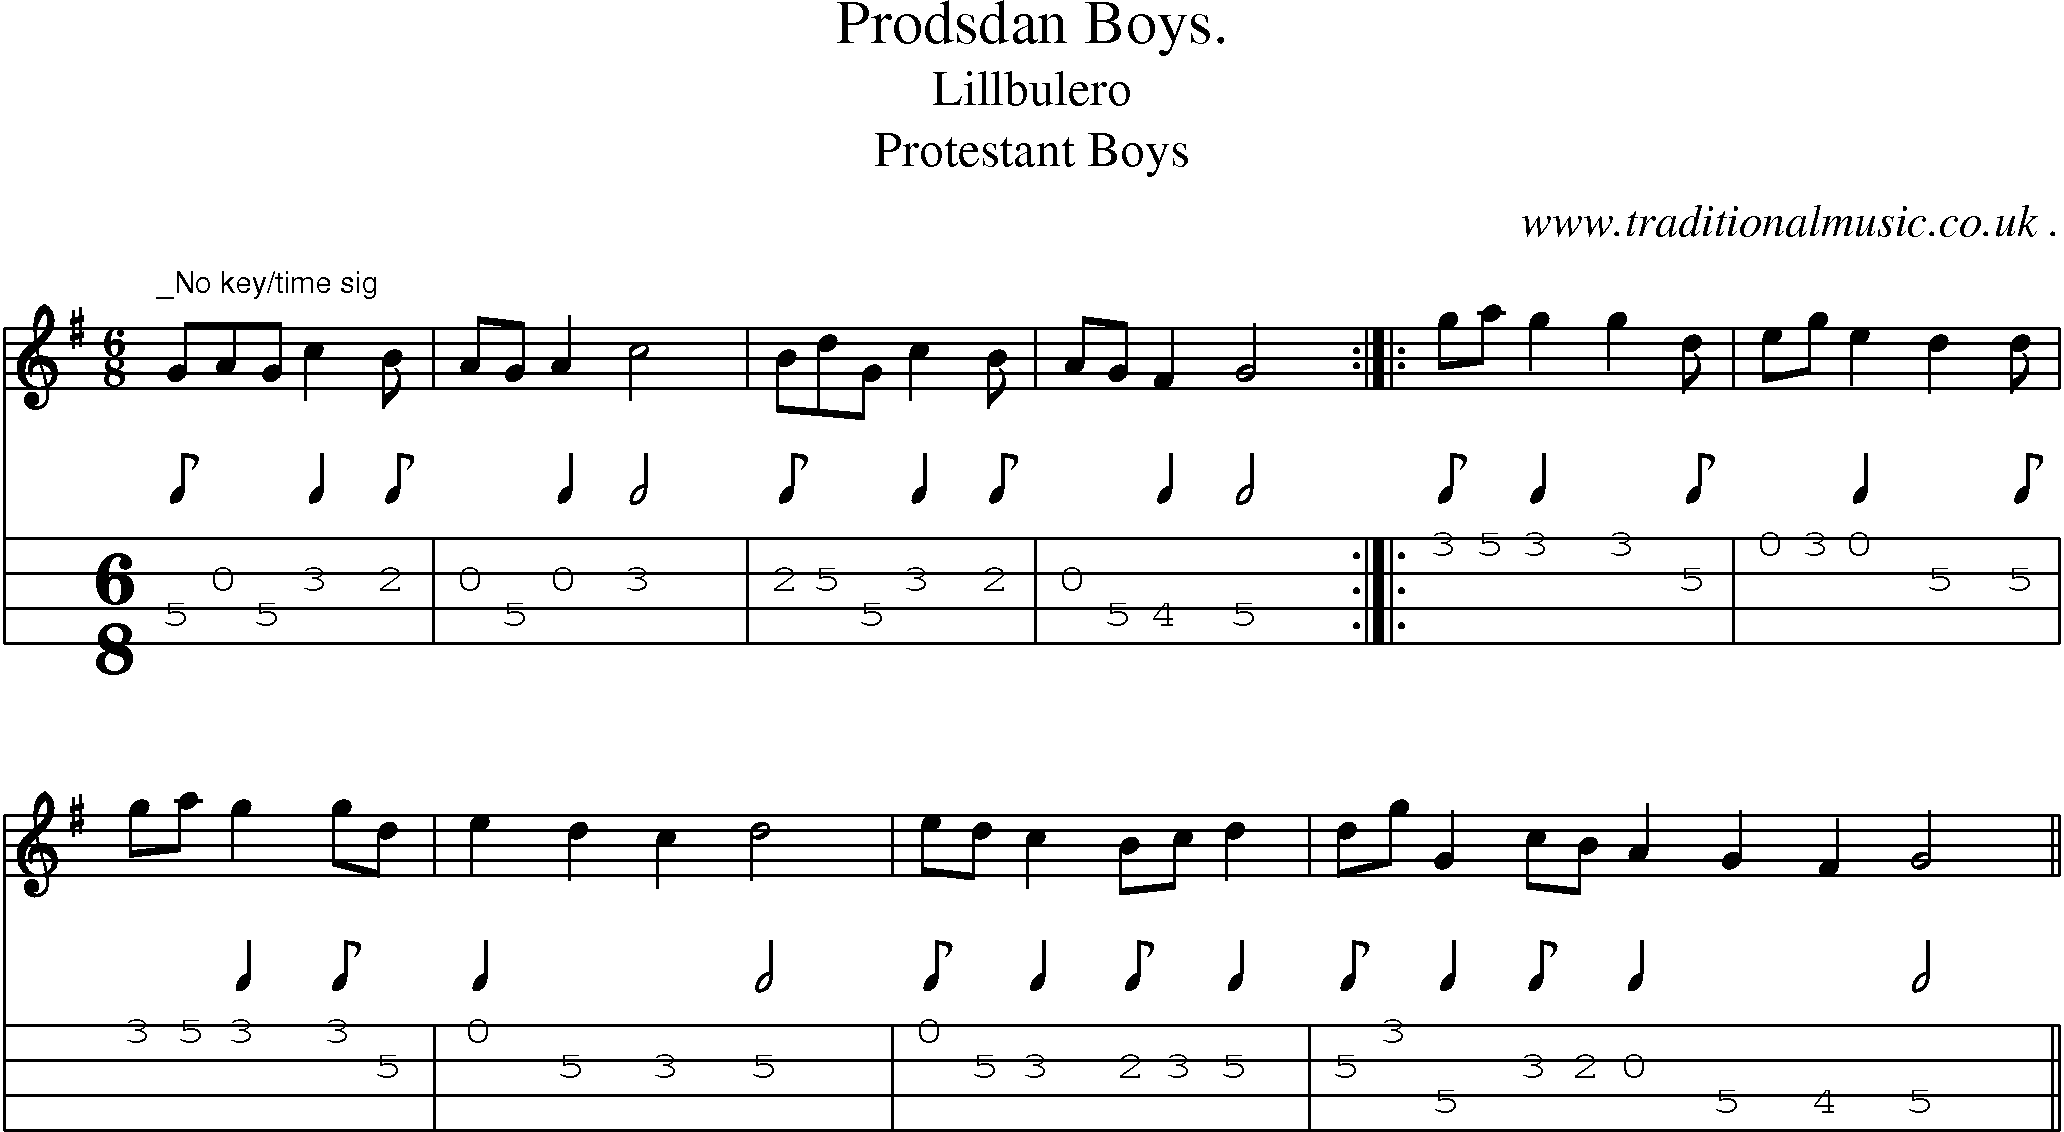 Sheet-Music and Mandolin Tabs for Prodsdan Boys